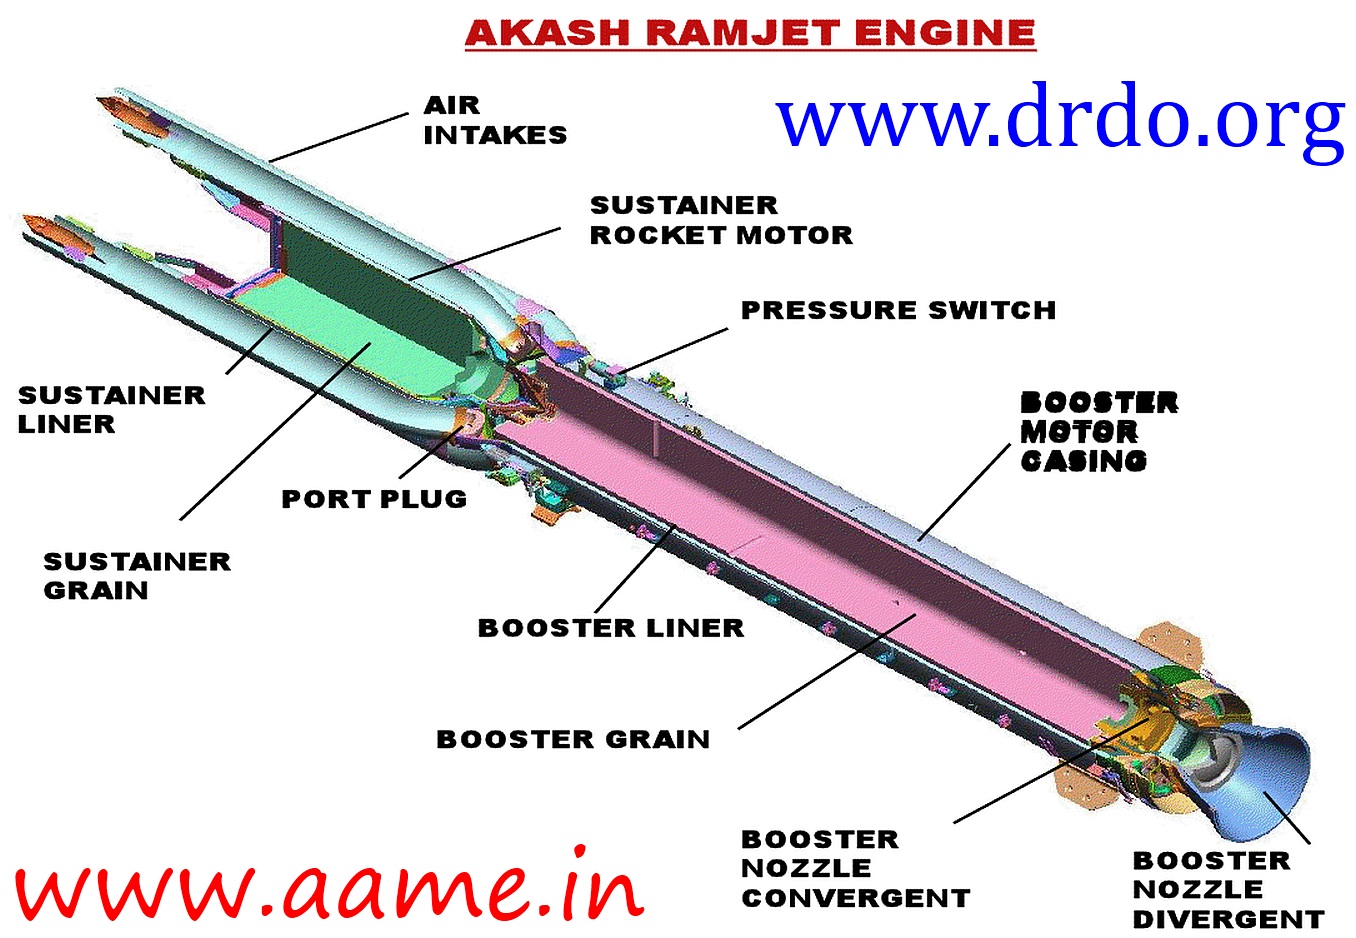 Akash-Missile-Ramjet-Engine-Cut-Section-01.jpg